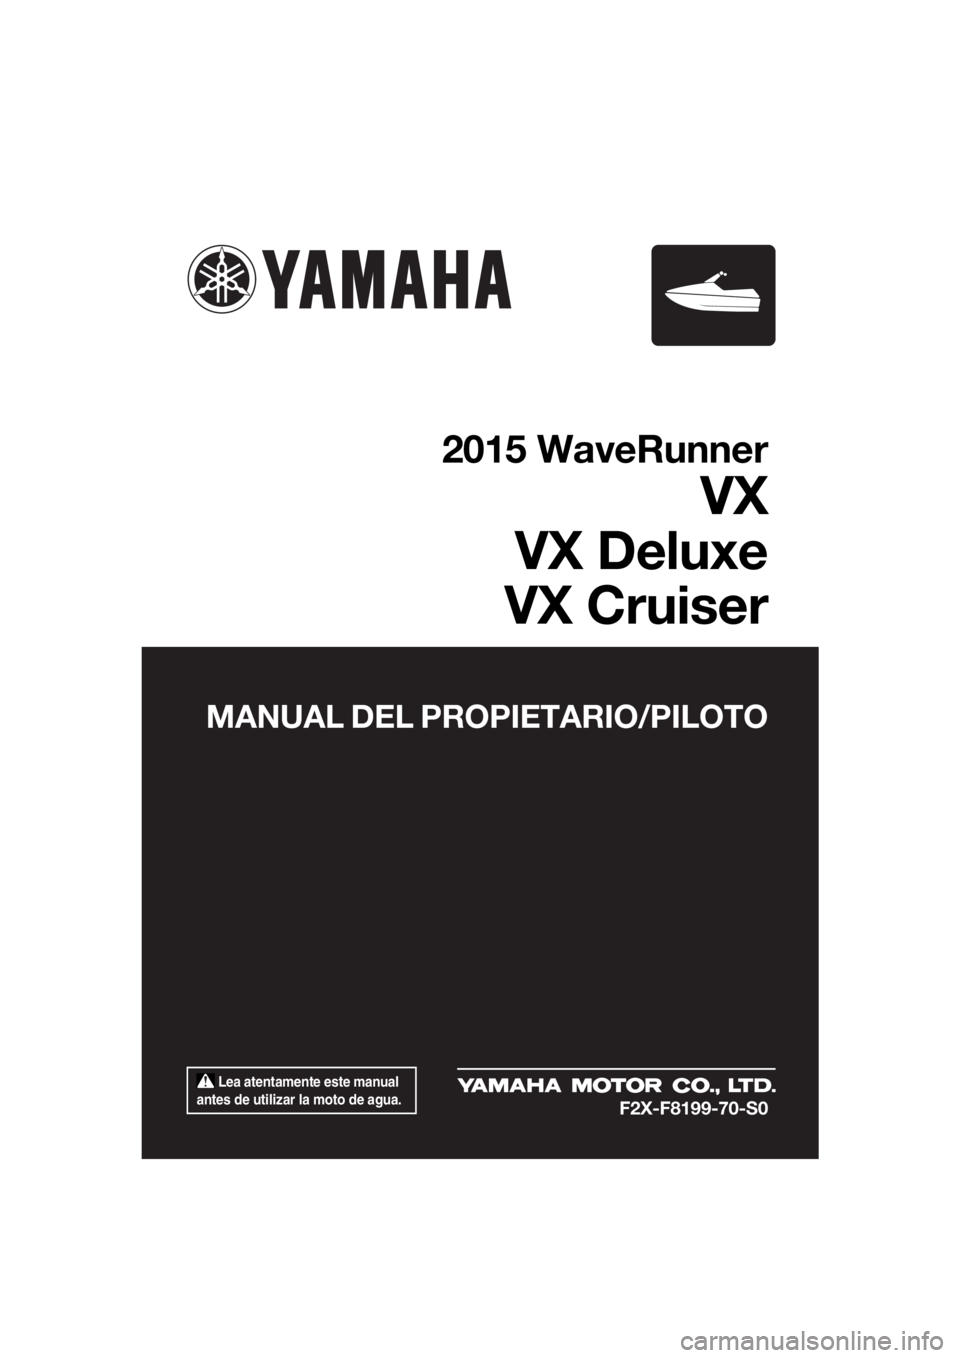 YAMAHA VX 2015  Manuale de Empleo (in Spanish) 